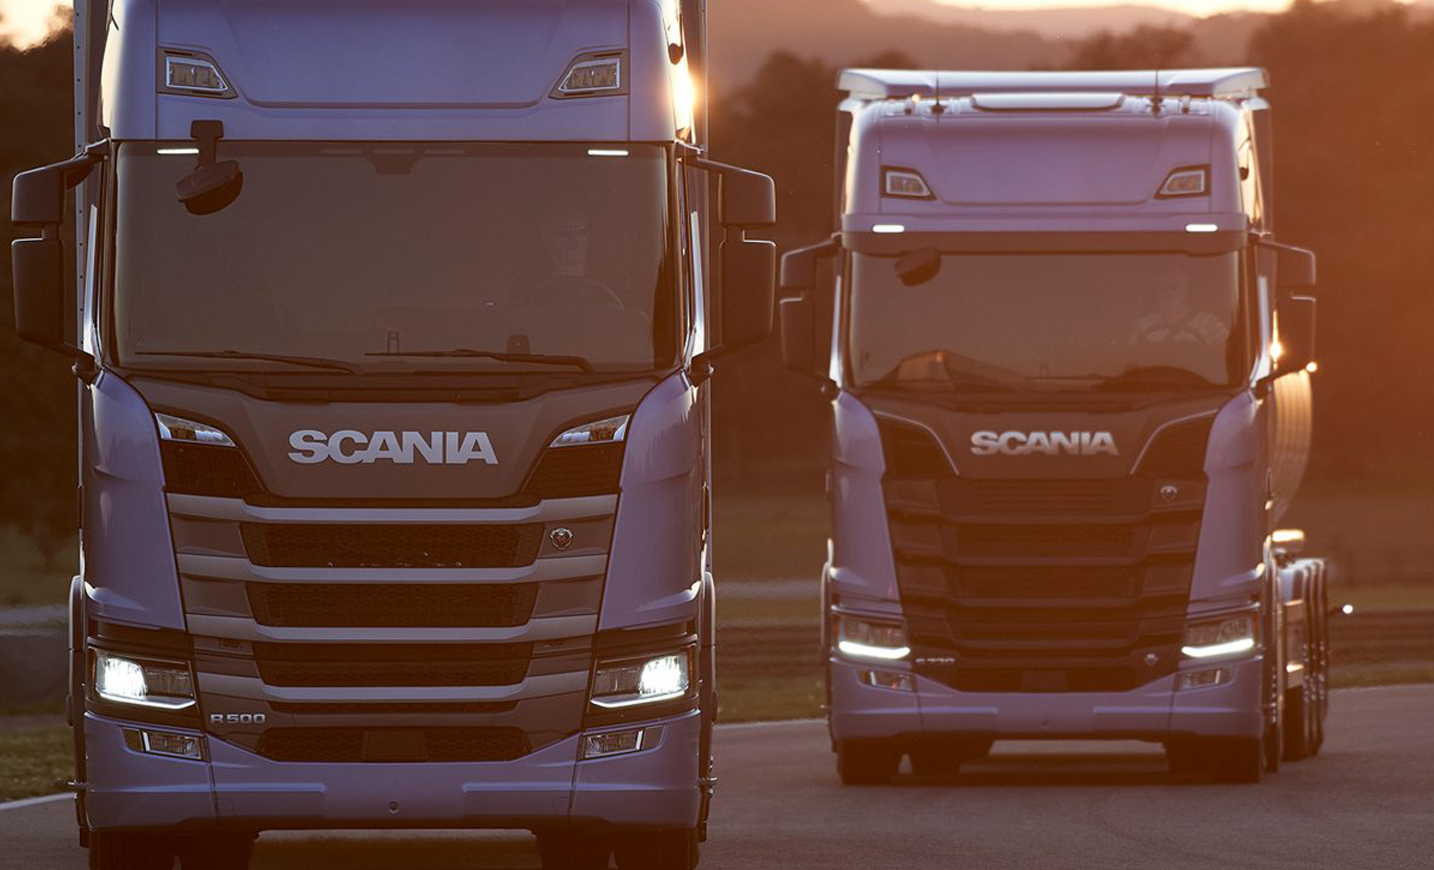 Scania introduces new truck range | Trucks UK Haulier